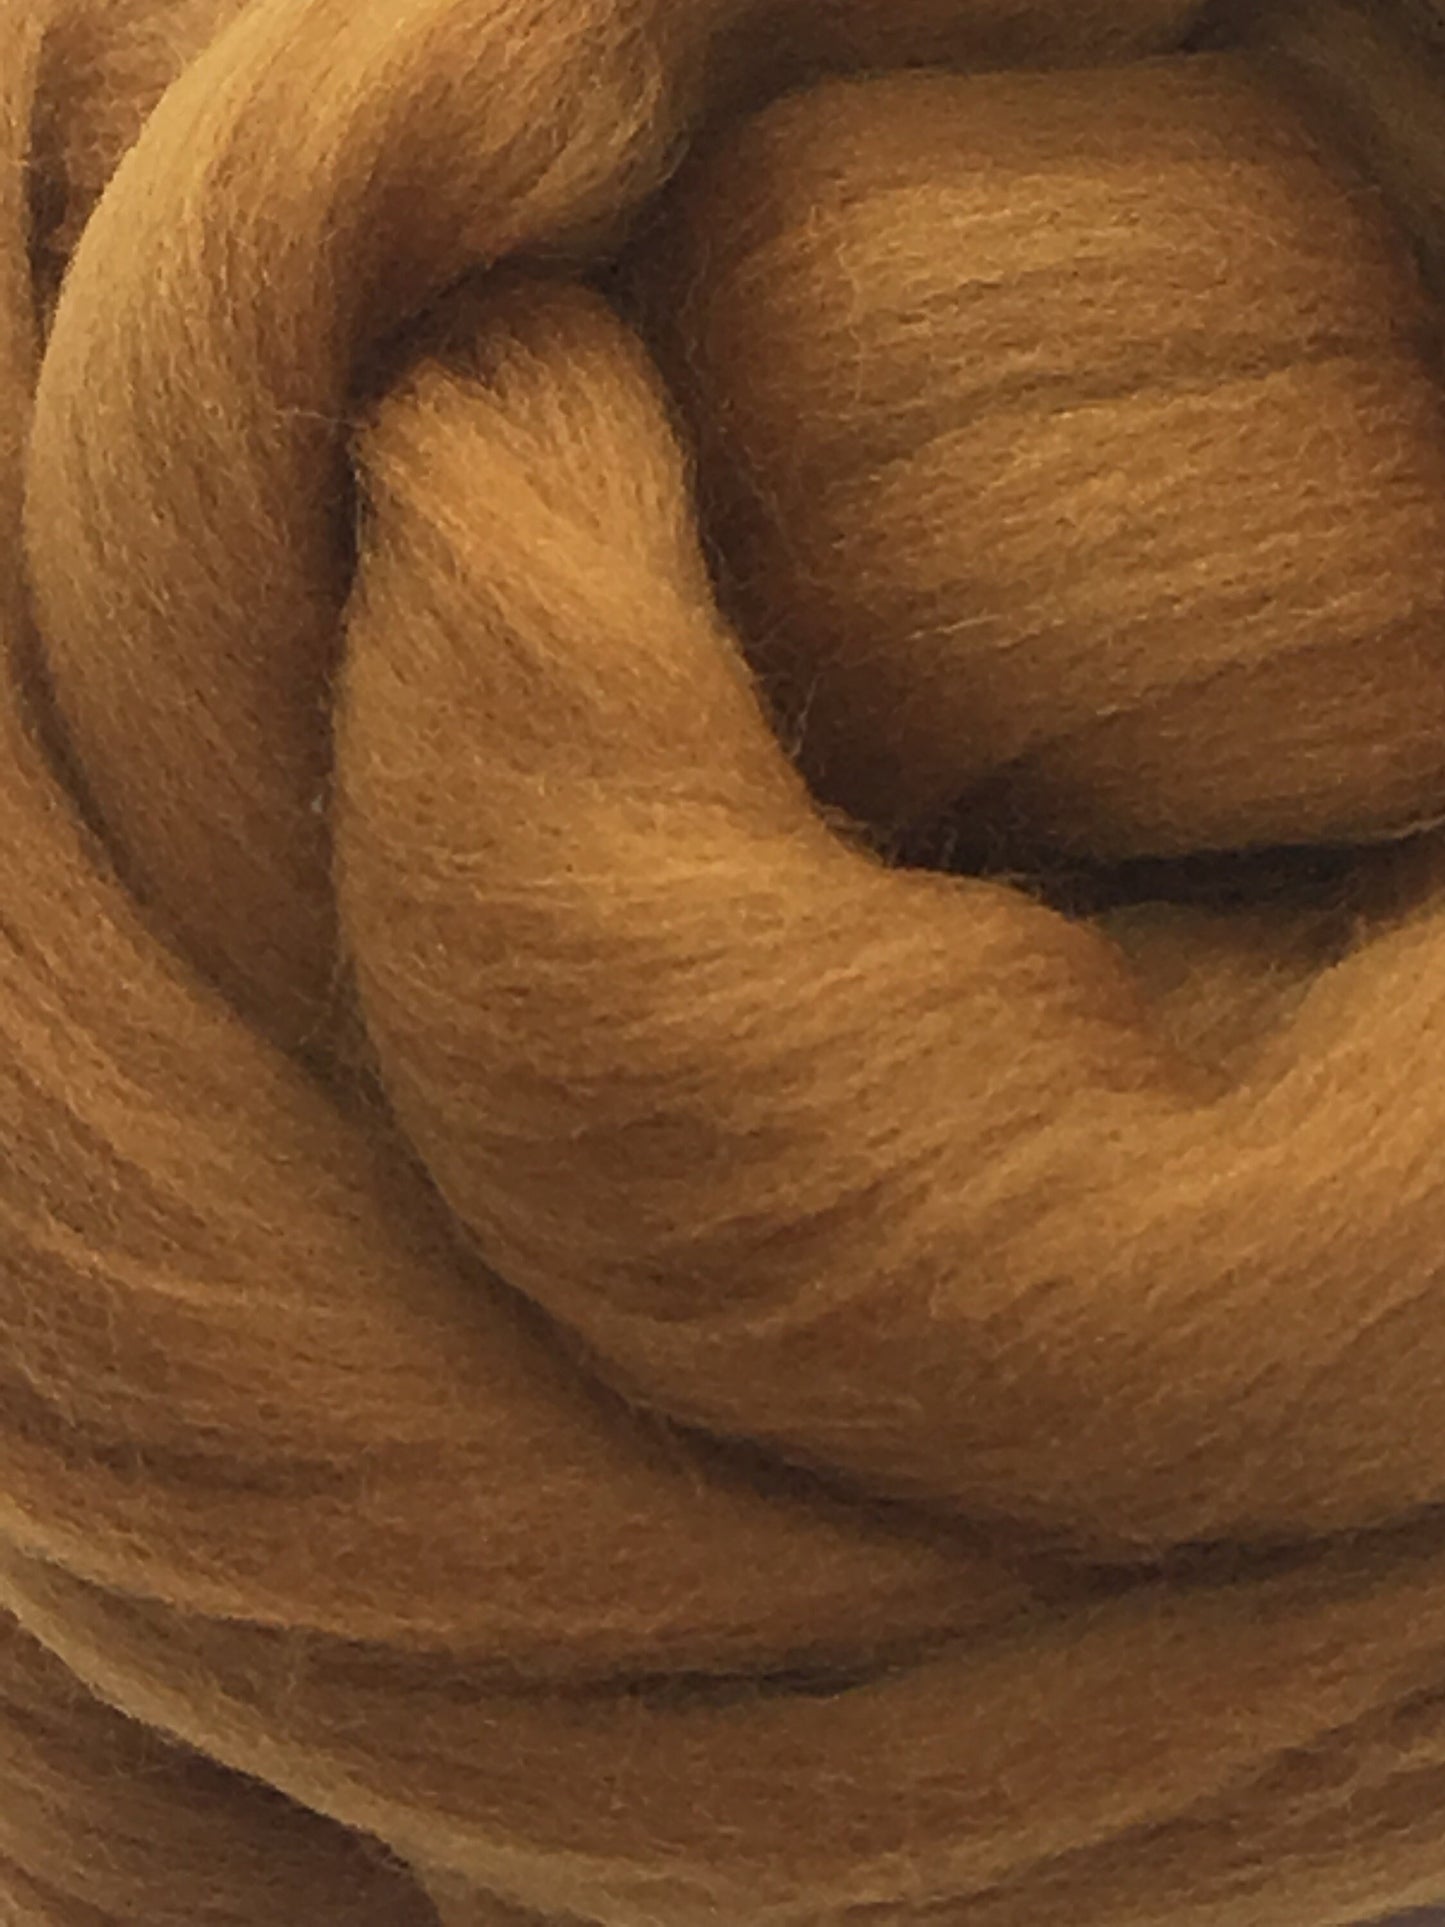 Cinnamon Spice Merino Wool Roving